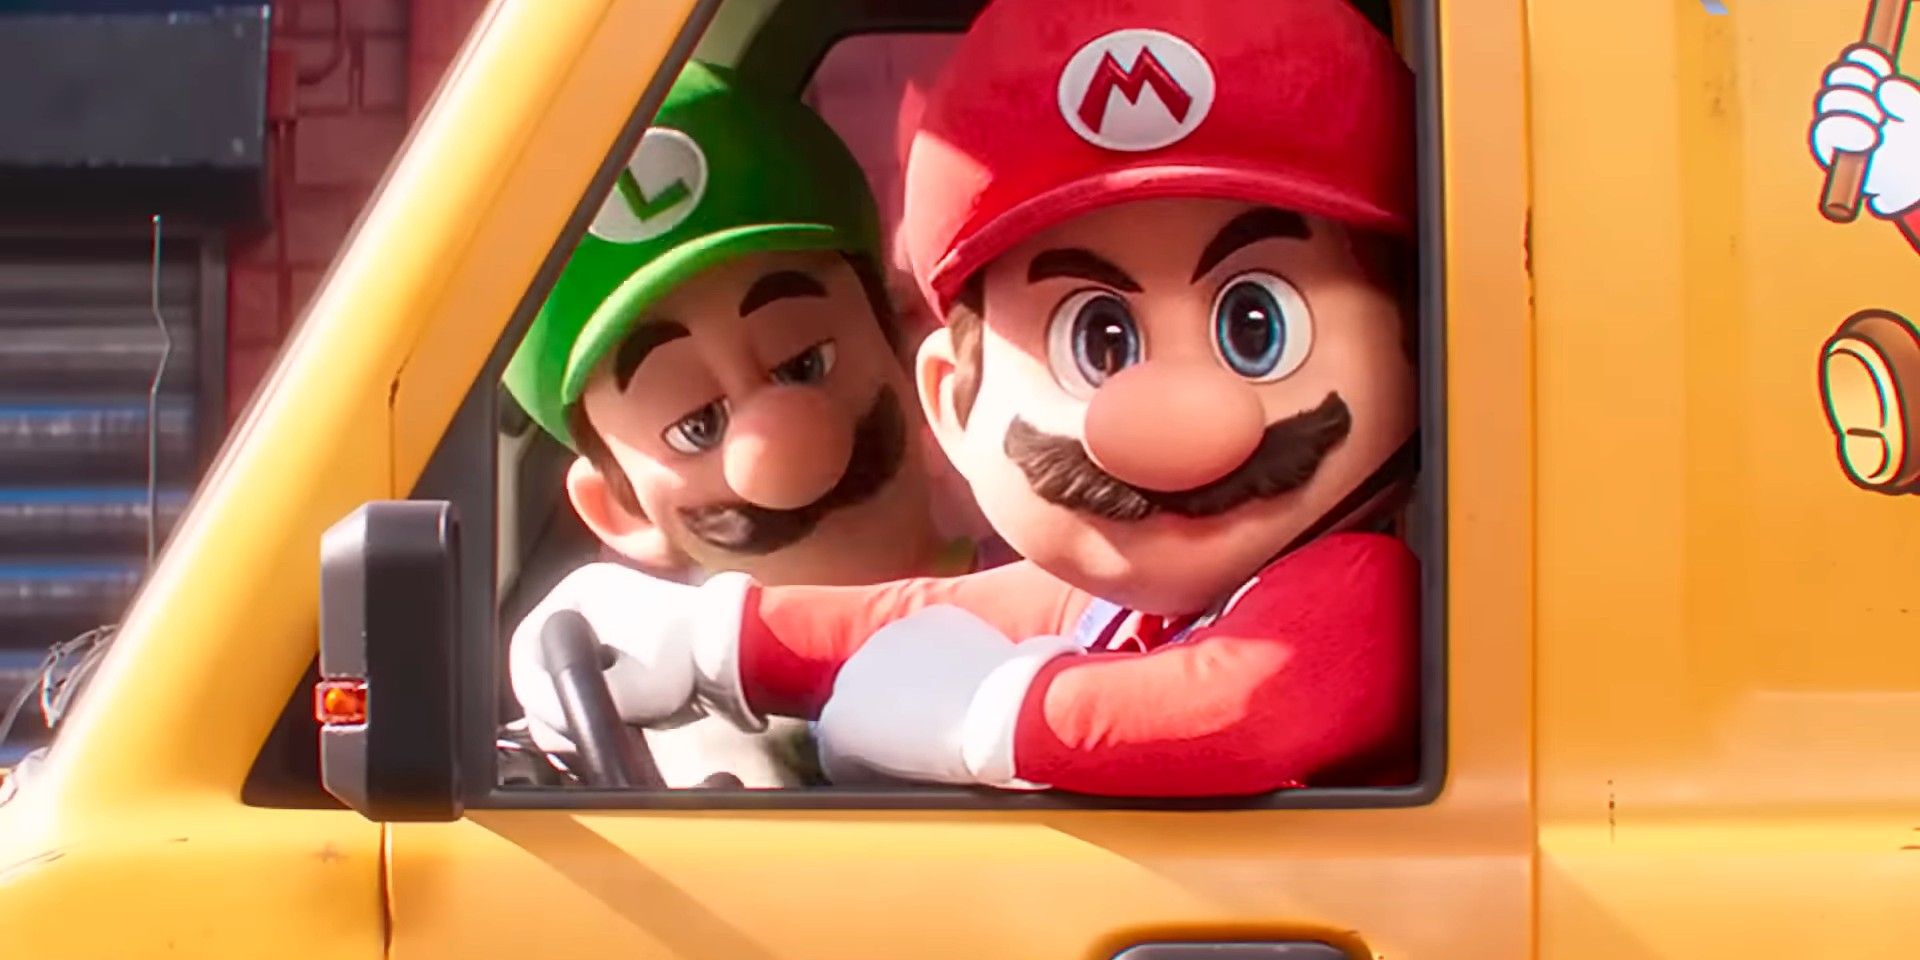 Luigi and Mario in their car in The Super Mario Bros movie